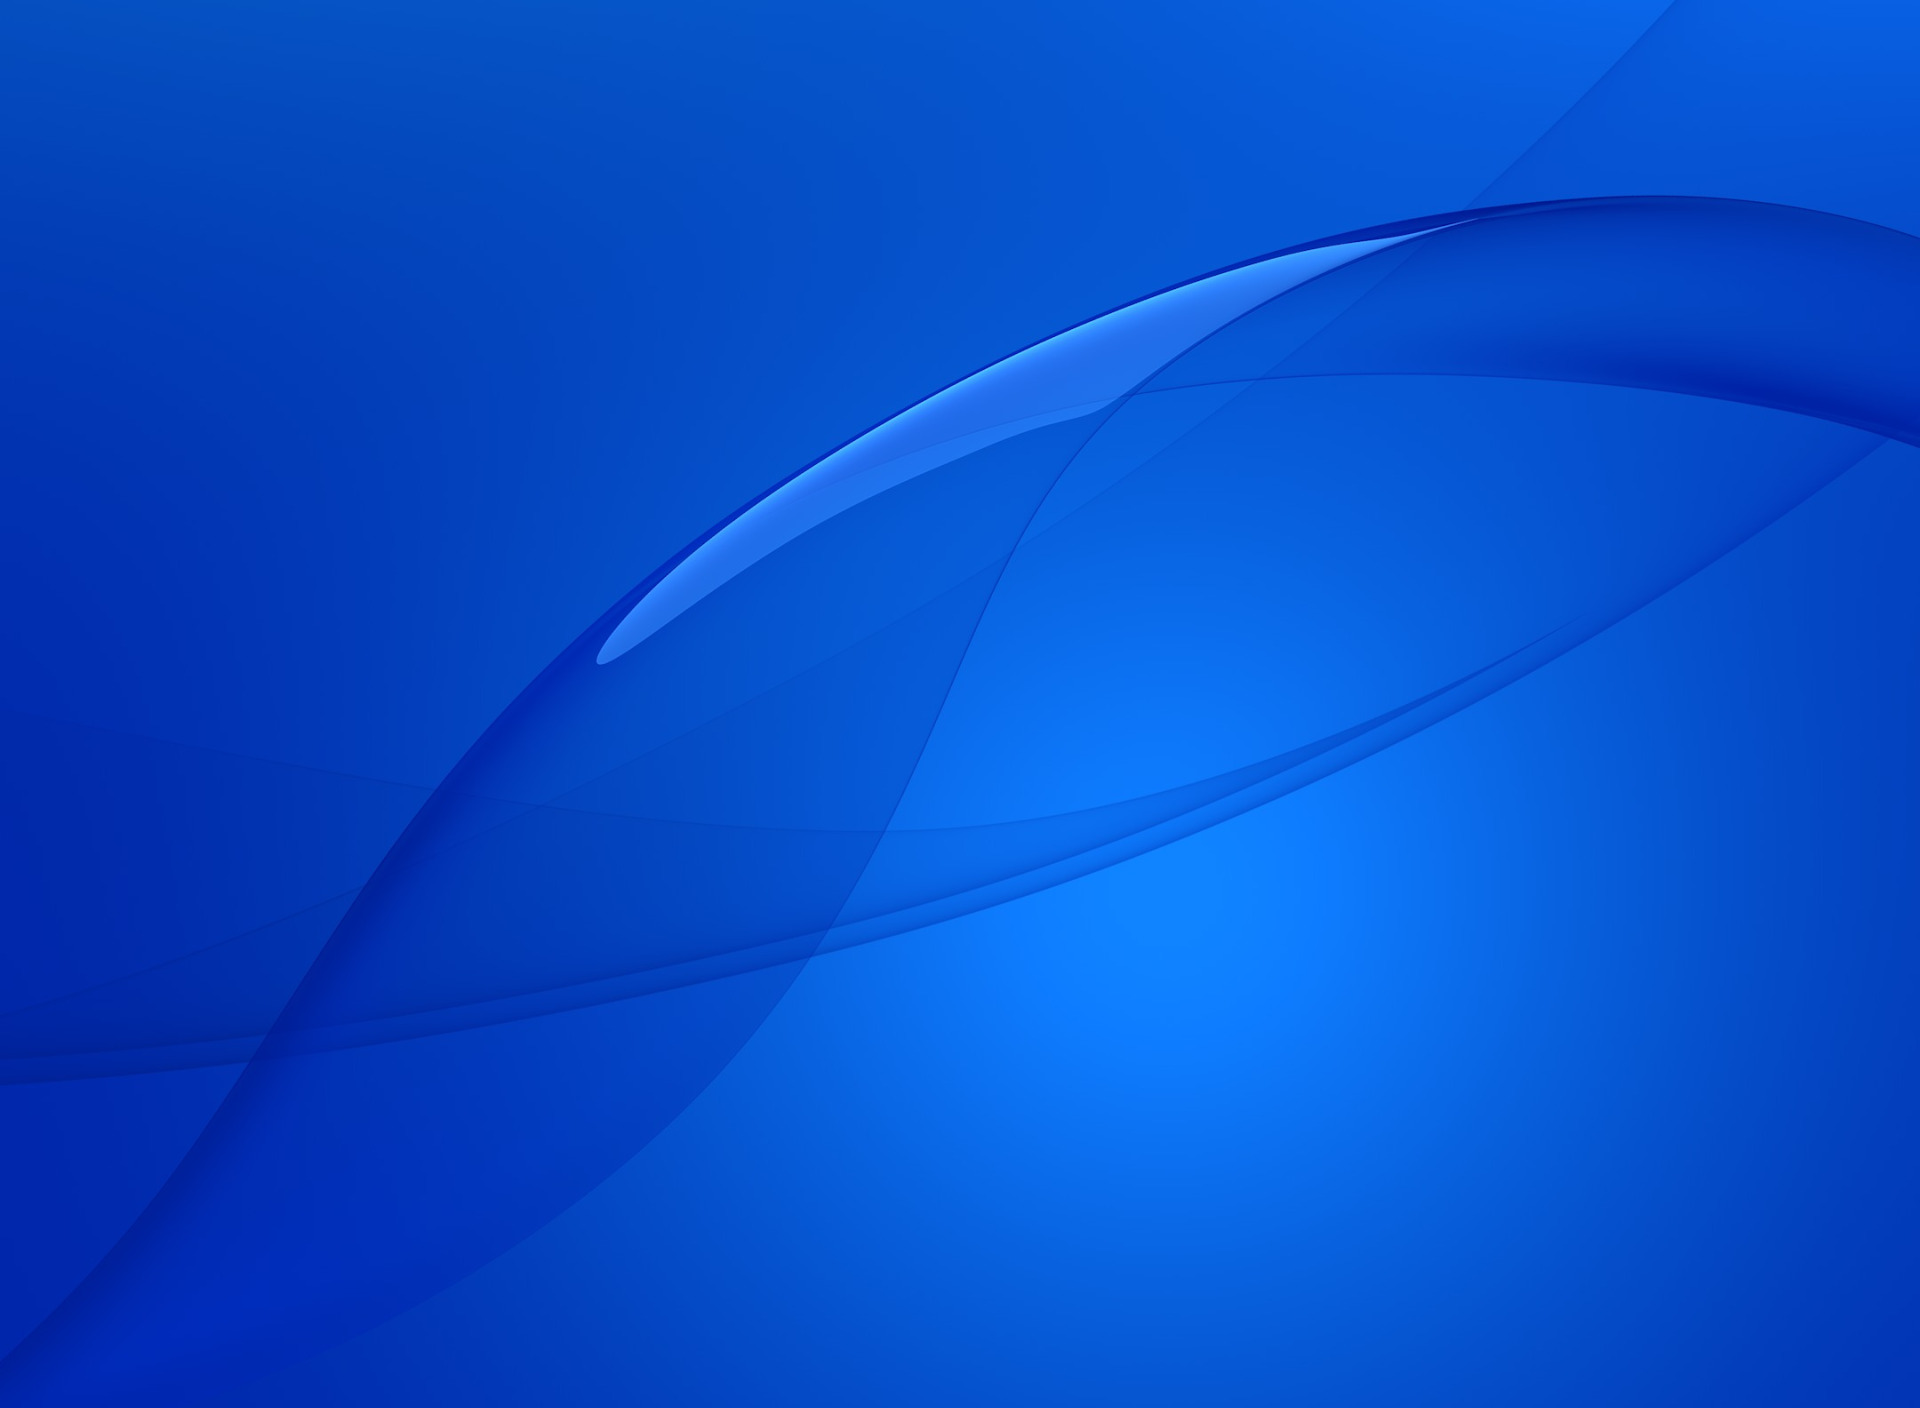 Sony Xperia z3 Premium. Обои сони иксперия z3. Красивый темно синий фон. Обои для Sony Xperia z. Обои xperia